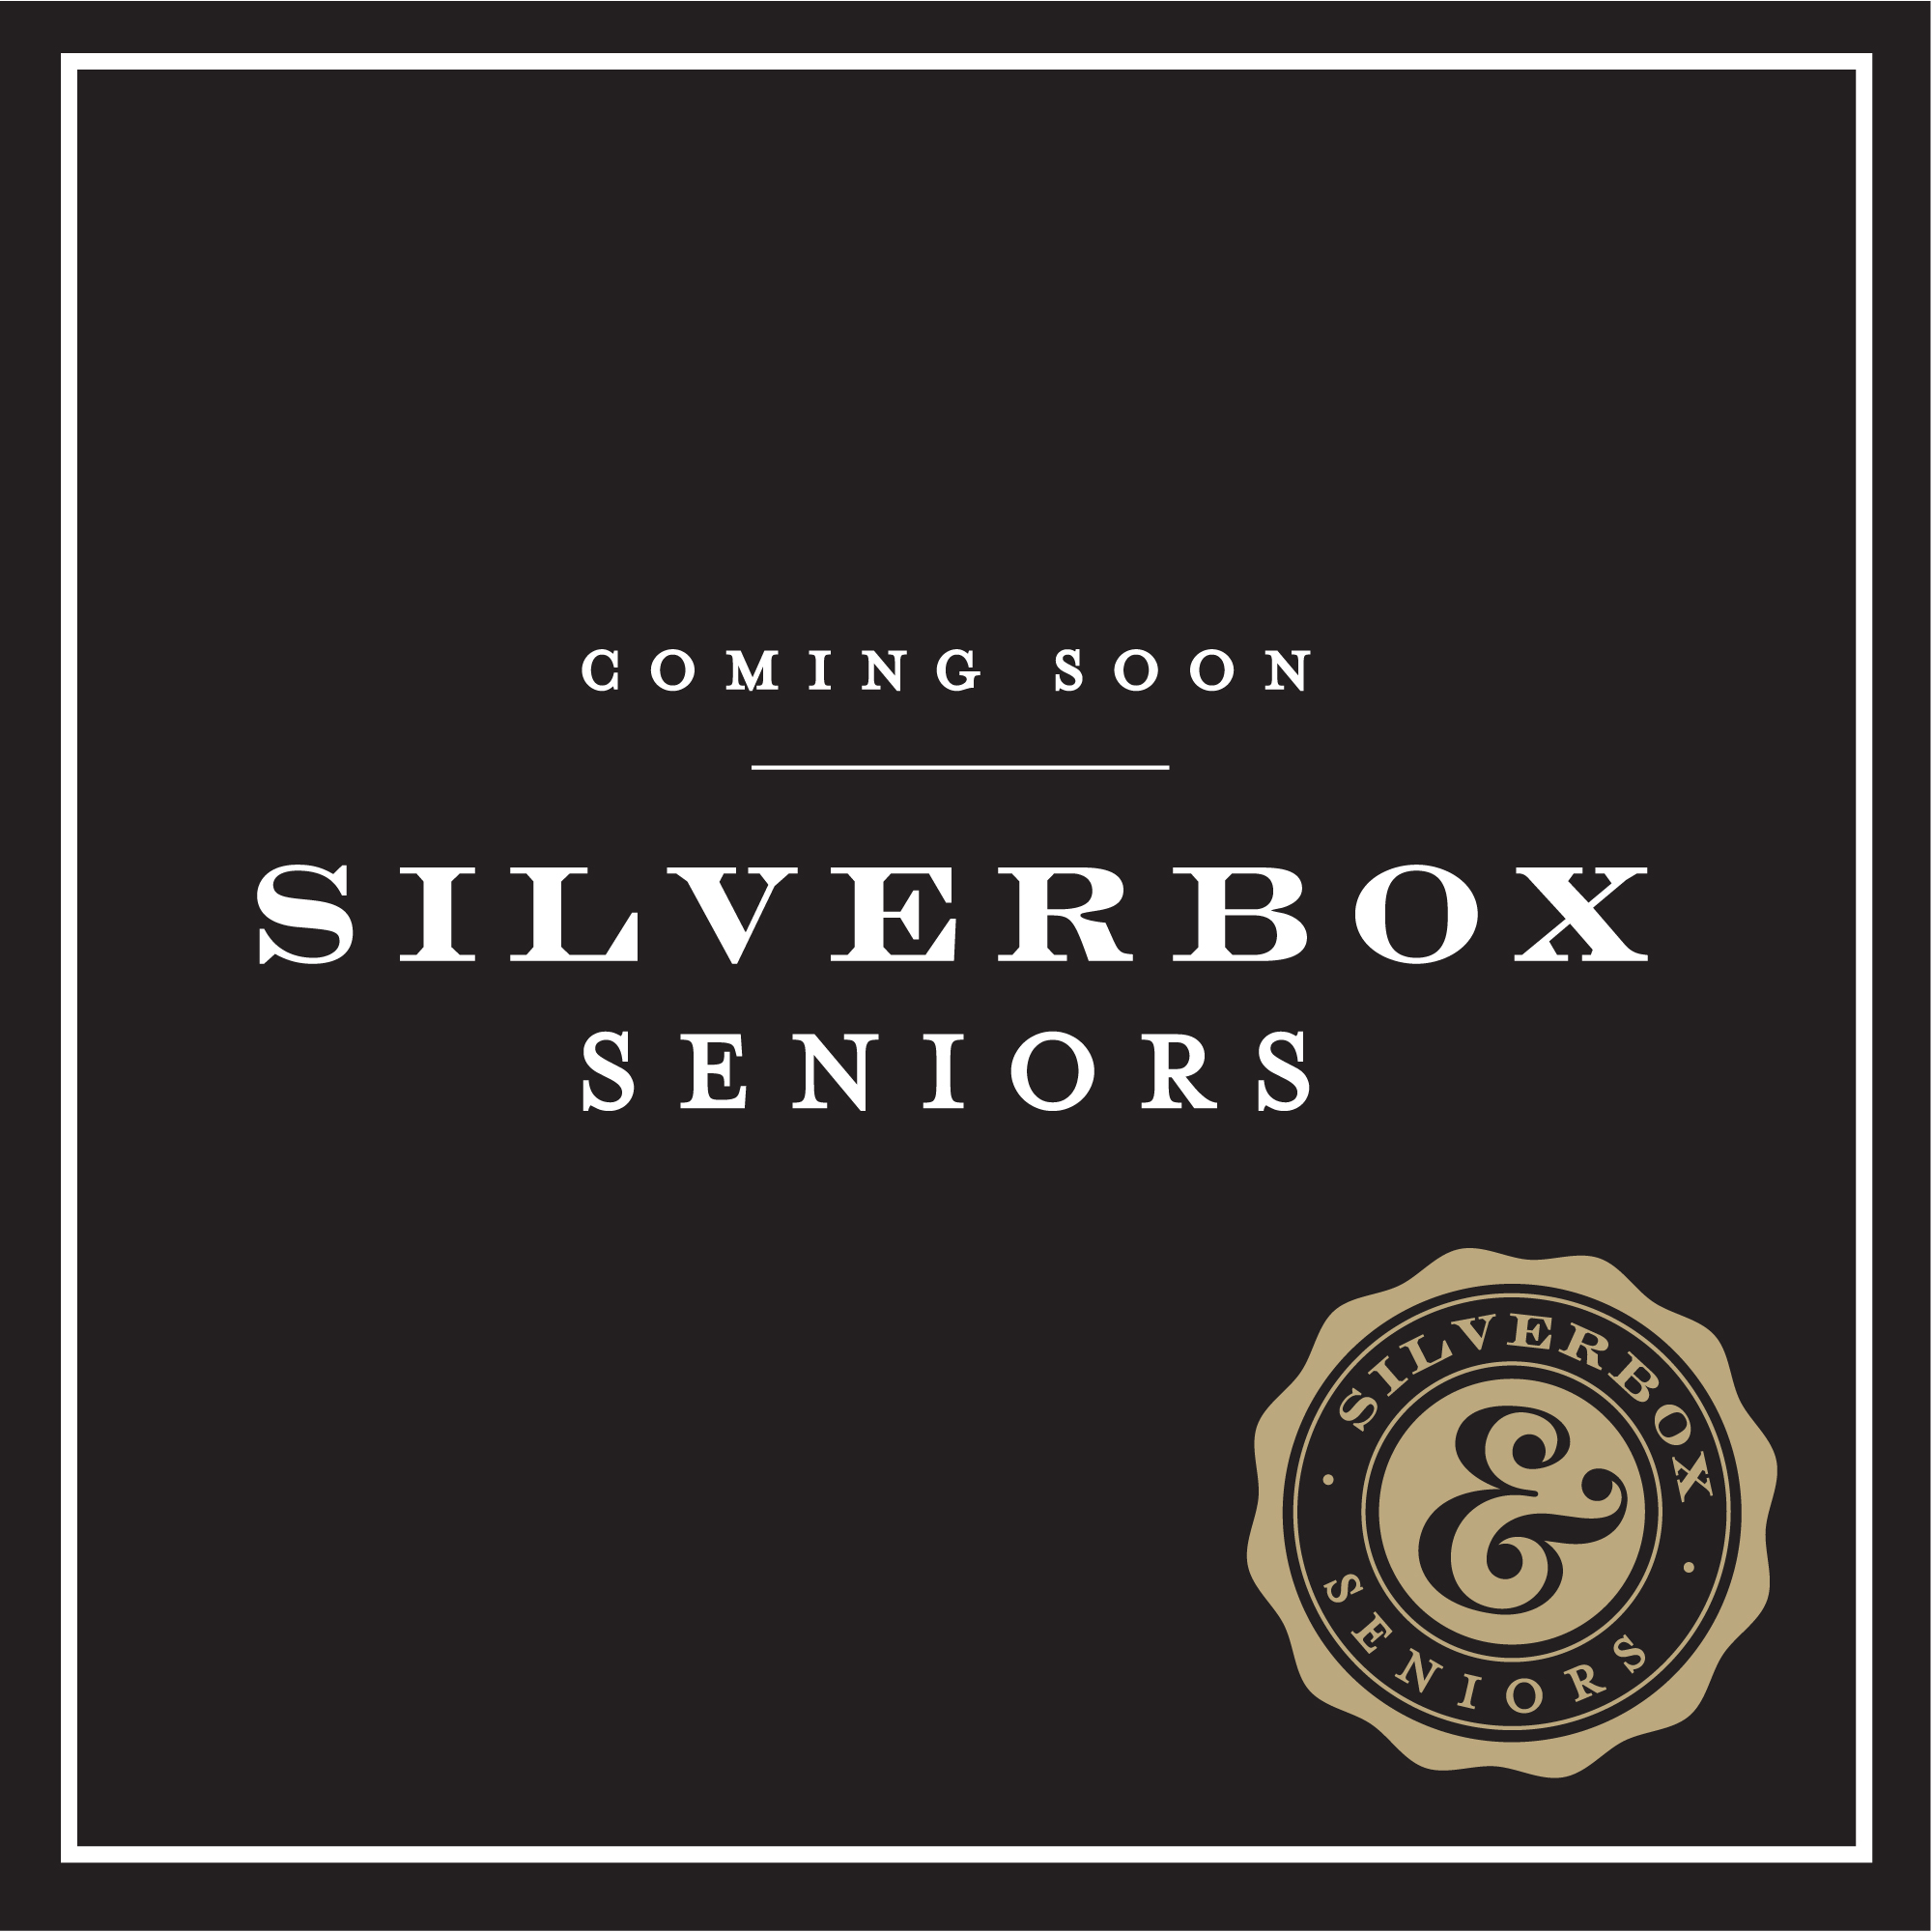 silverbox seniors